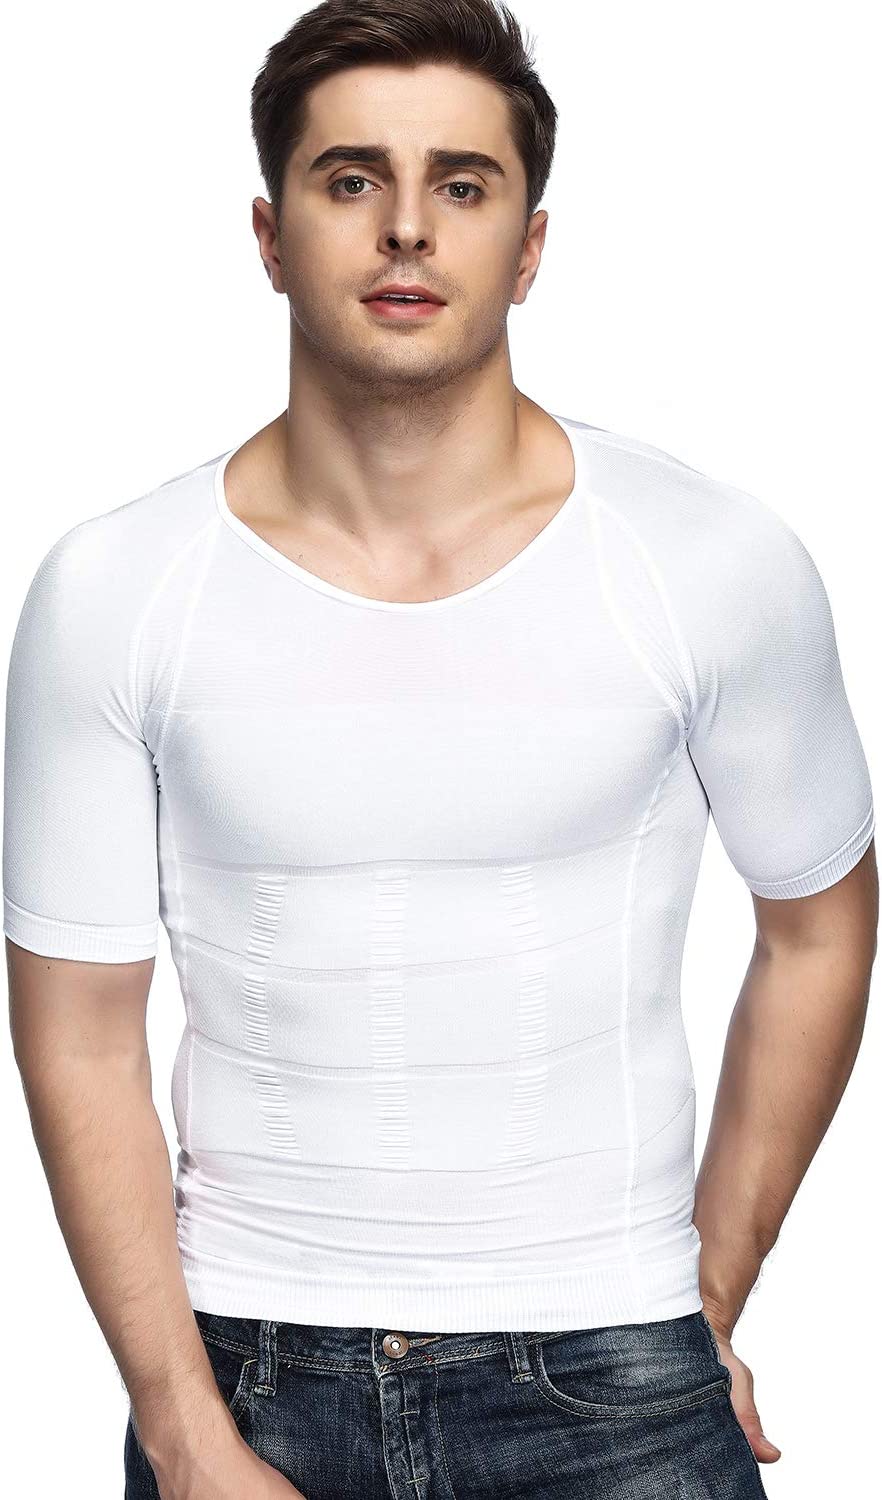 Men's Body Shaper Slimming Shirt Tummy Vest